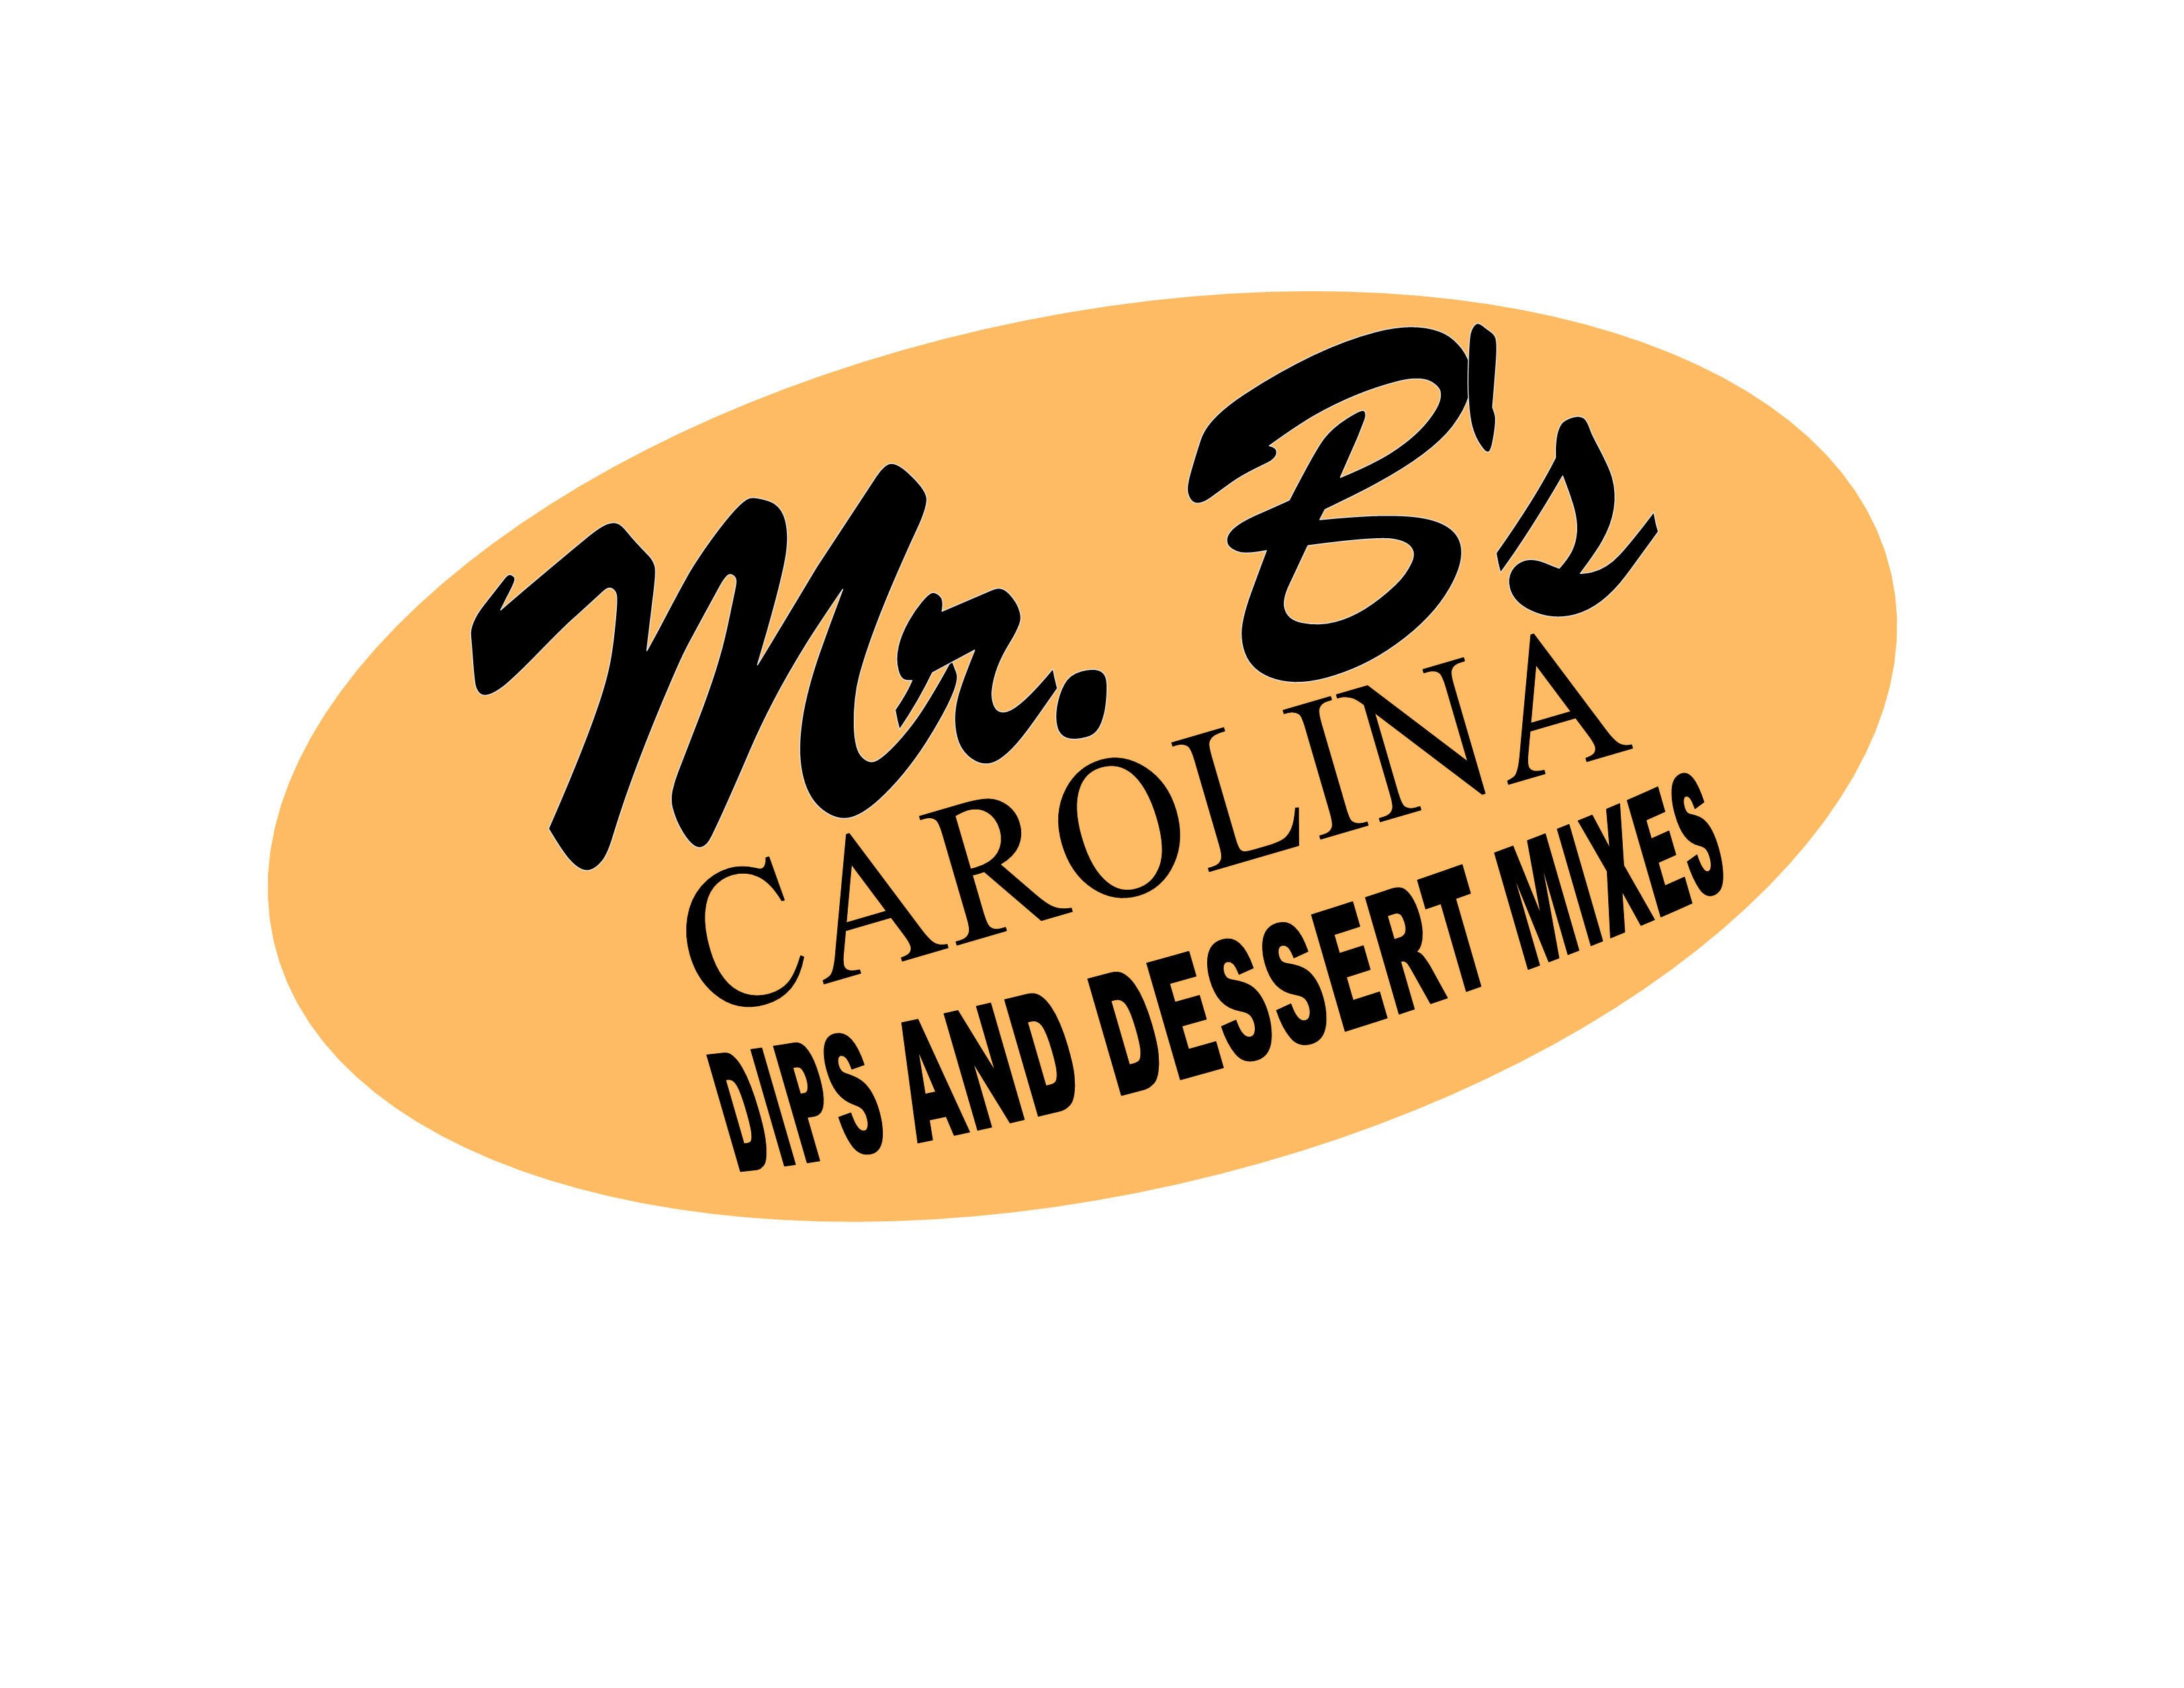 Mr. B's Carolina Dips & Dessert Mix